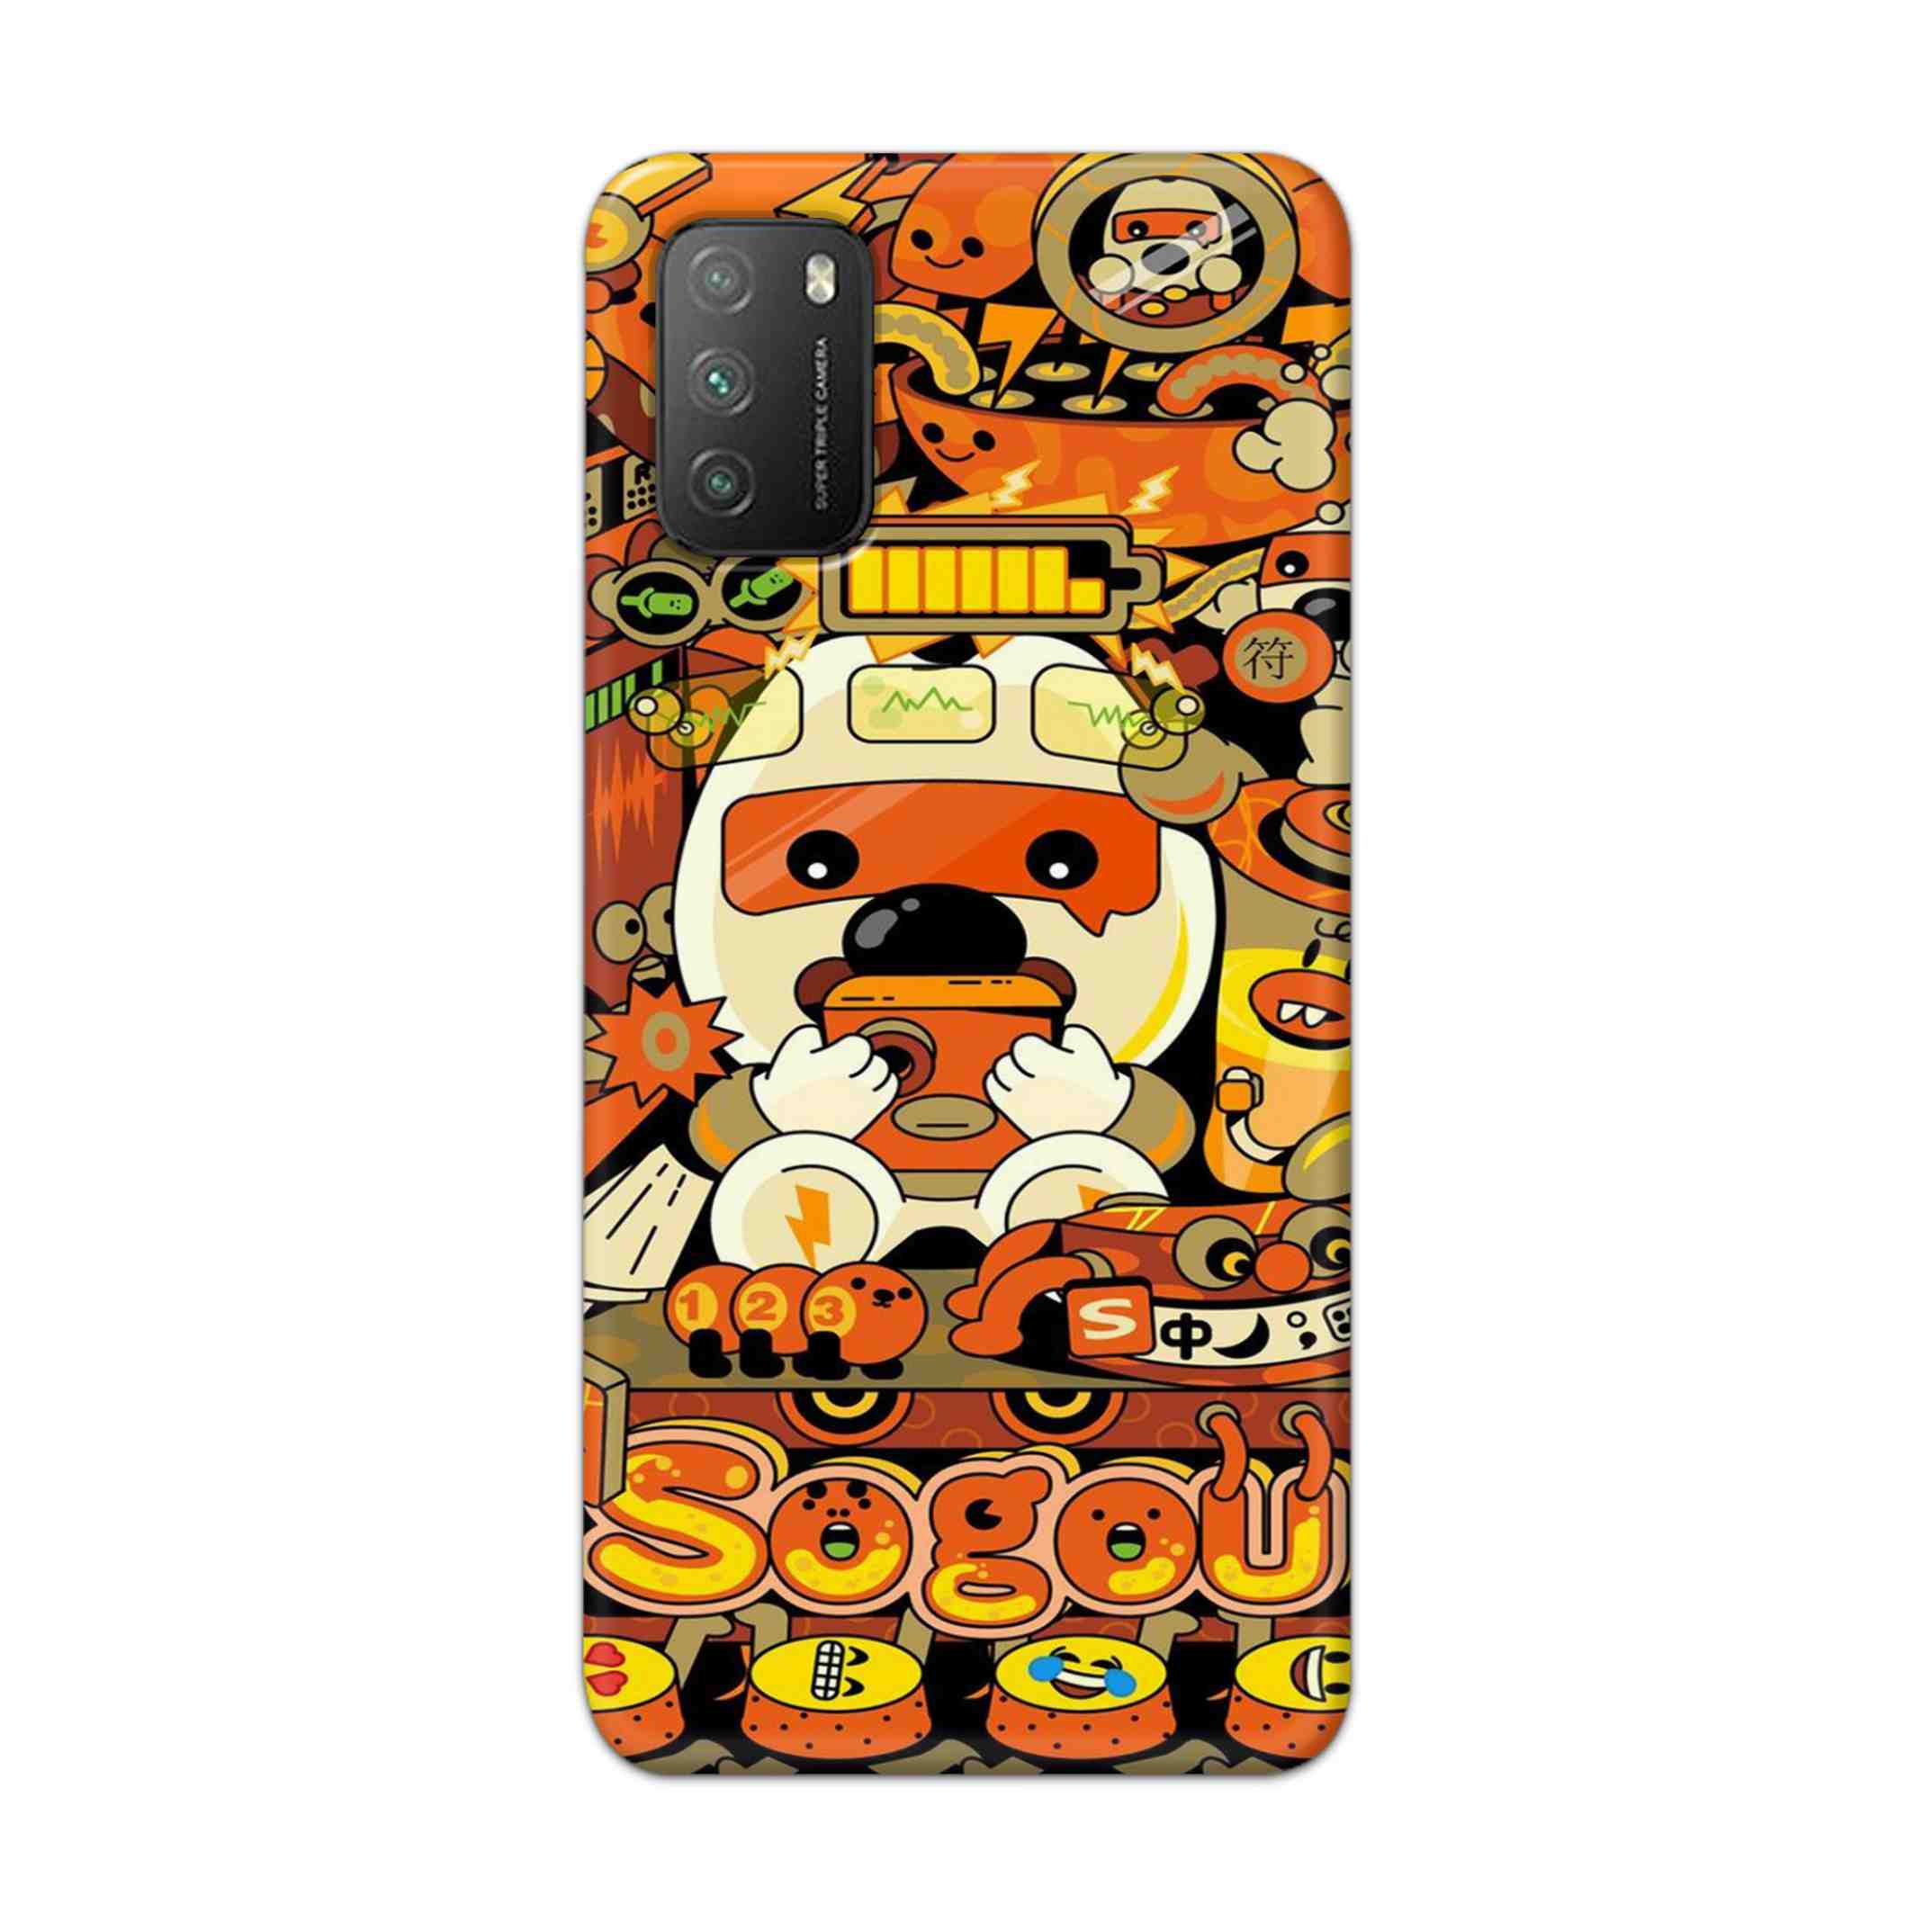 Buy Sogou Hard Back Mobile Phone Case Cover For Poco M3 Online